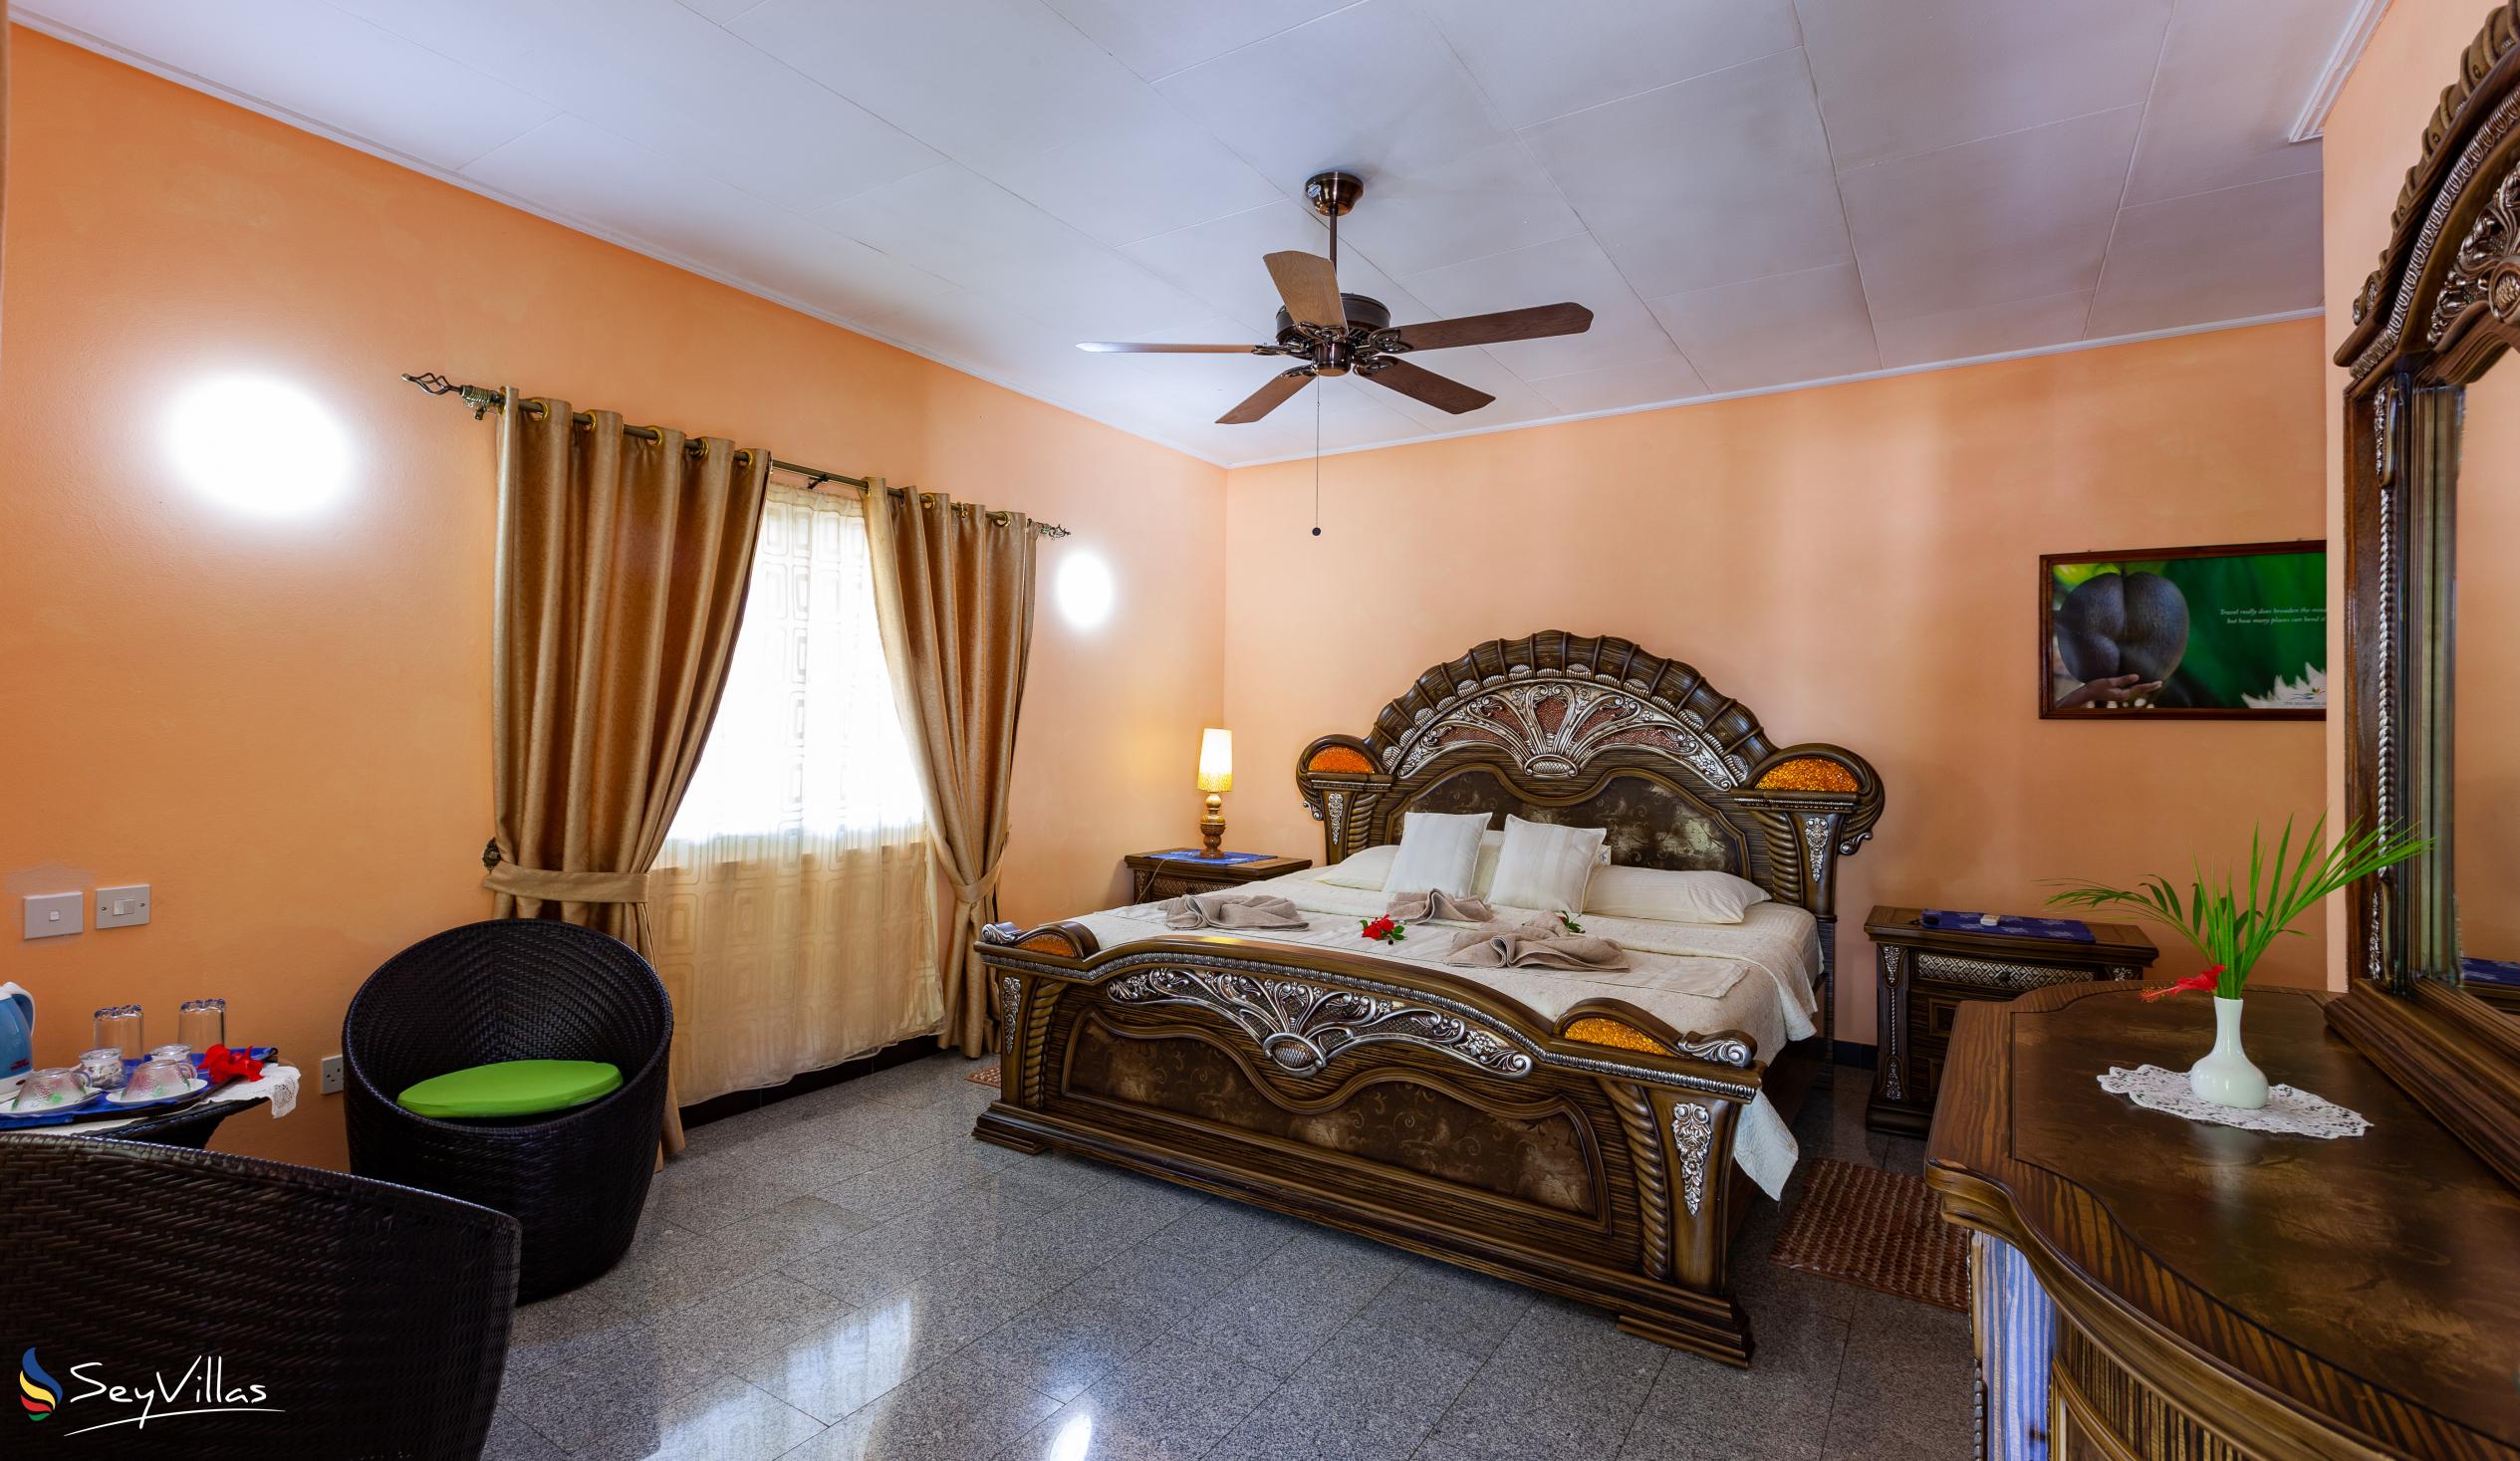 Photo 117: Villa Bananier - Superior Room - Praslin (Seychelles)